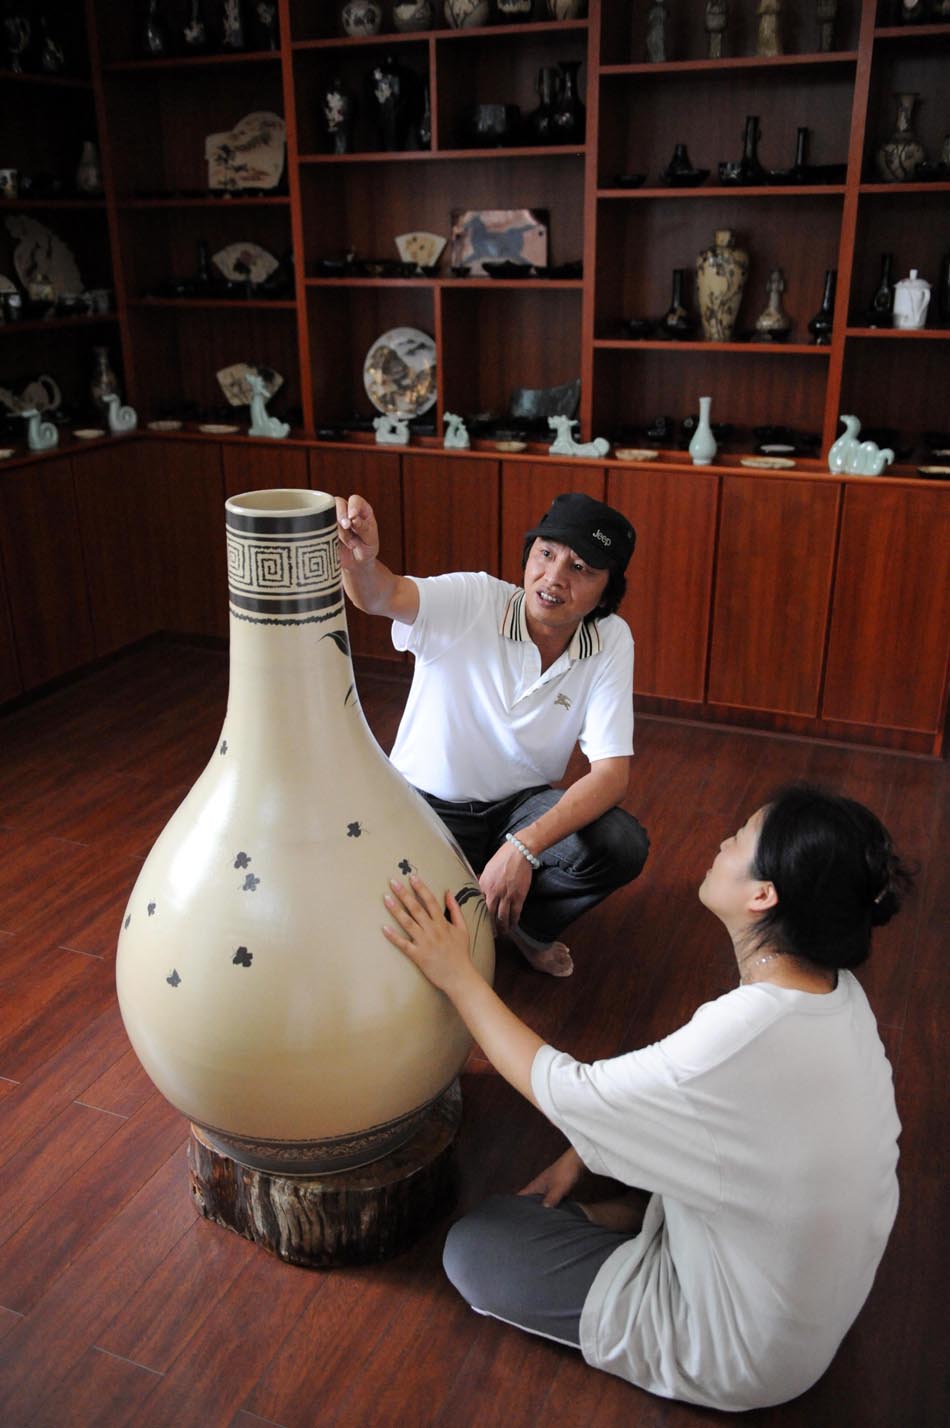 Li Bin (L) discusses porcelain art with a friend at a workroom in Jingdezhen, east China's Jiangxi Province, Aug. 18, 2012. (Xinhua/Zhang Ruiqi)